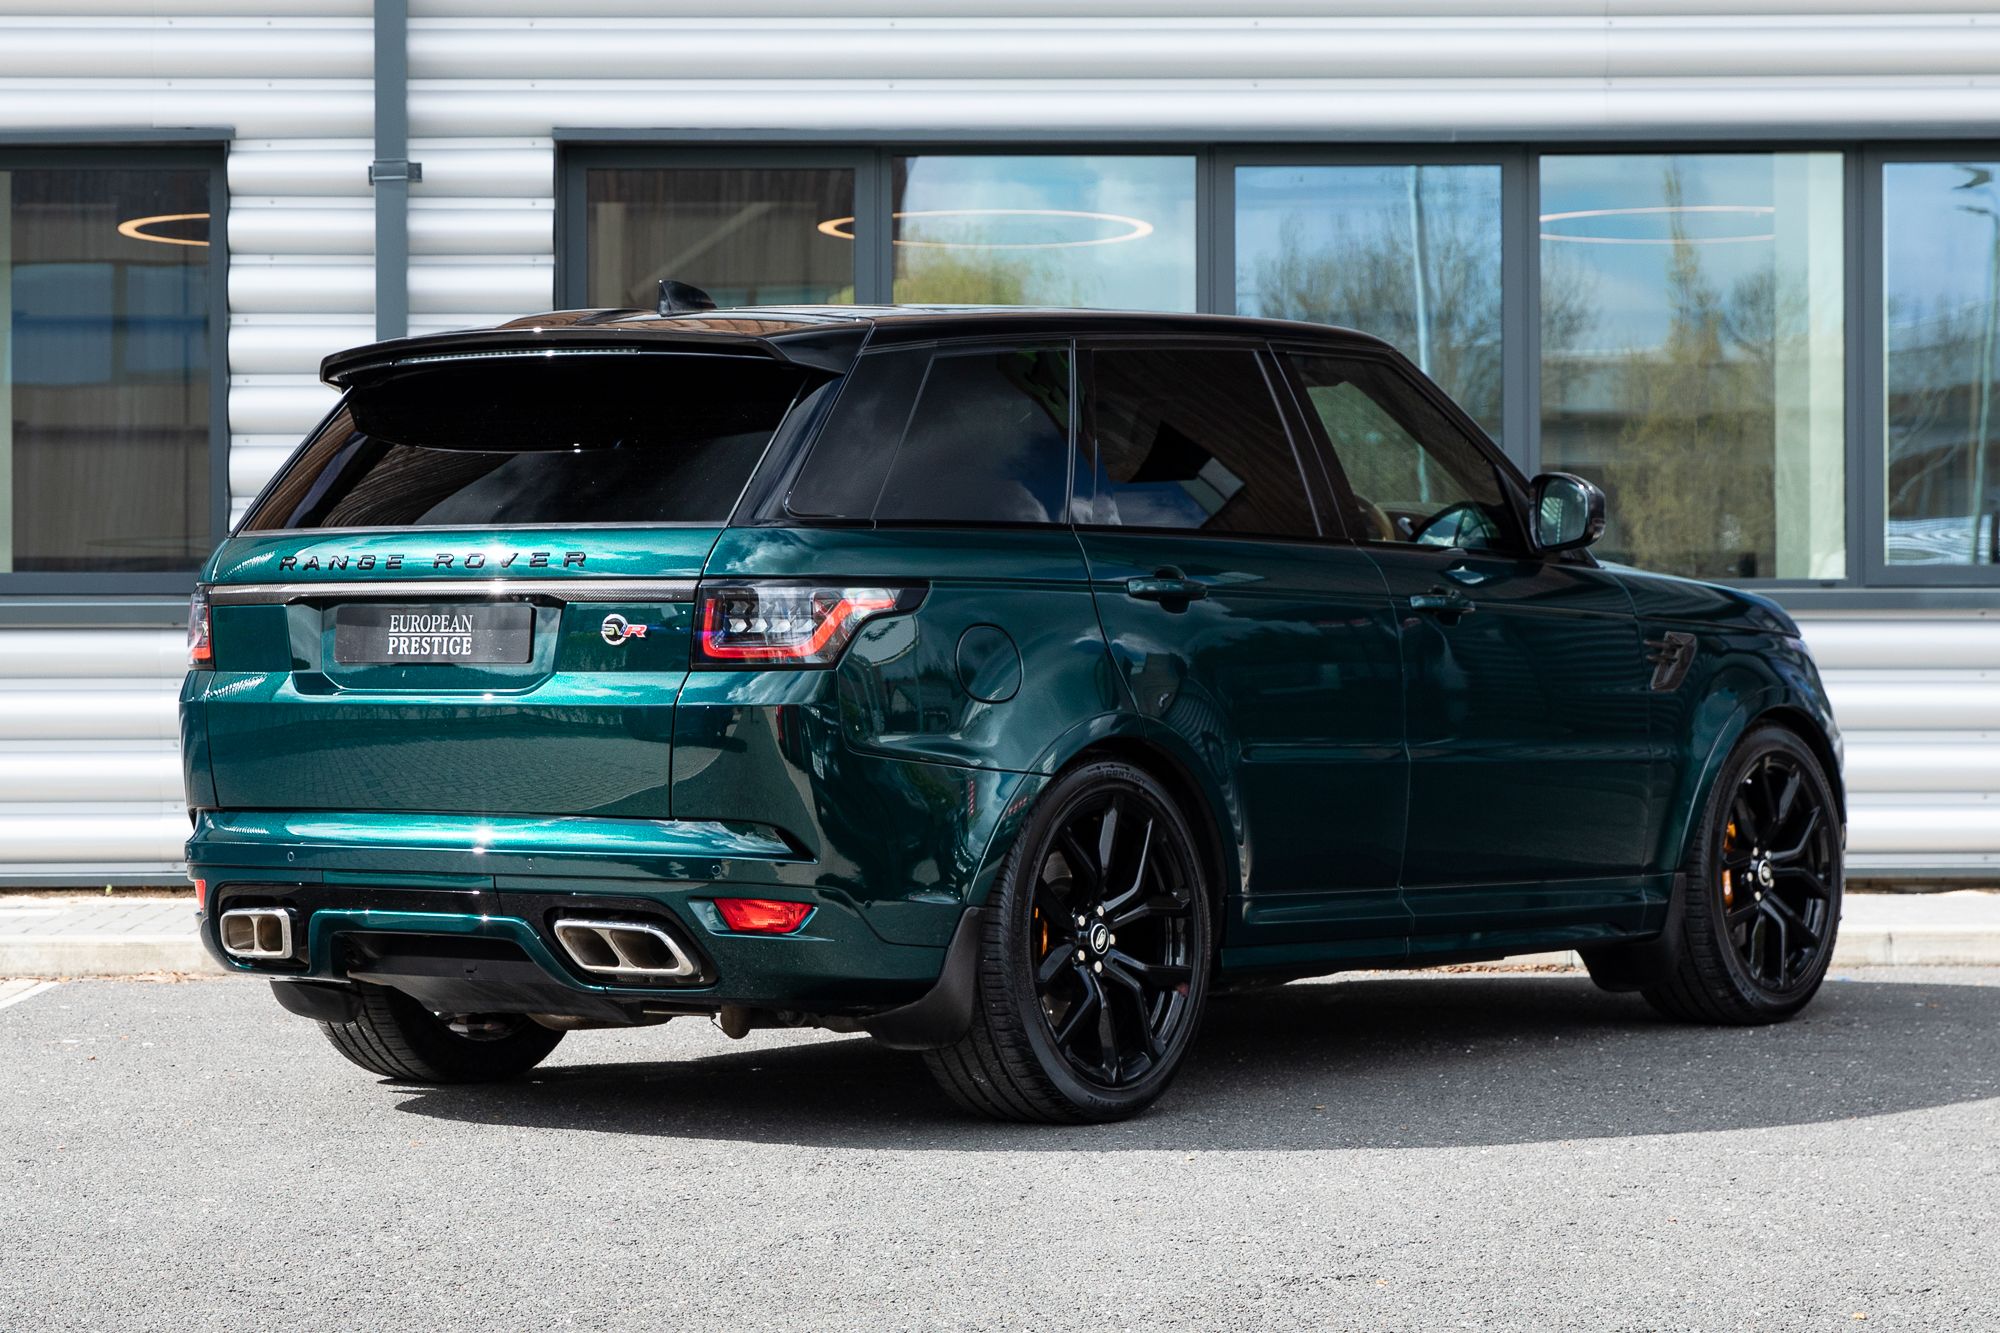 2021 Land Rover Range Rover SVR Carbon Edition